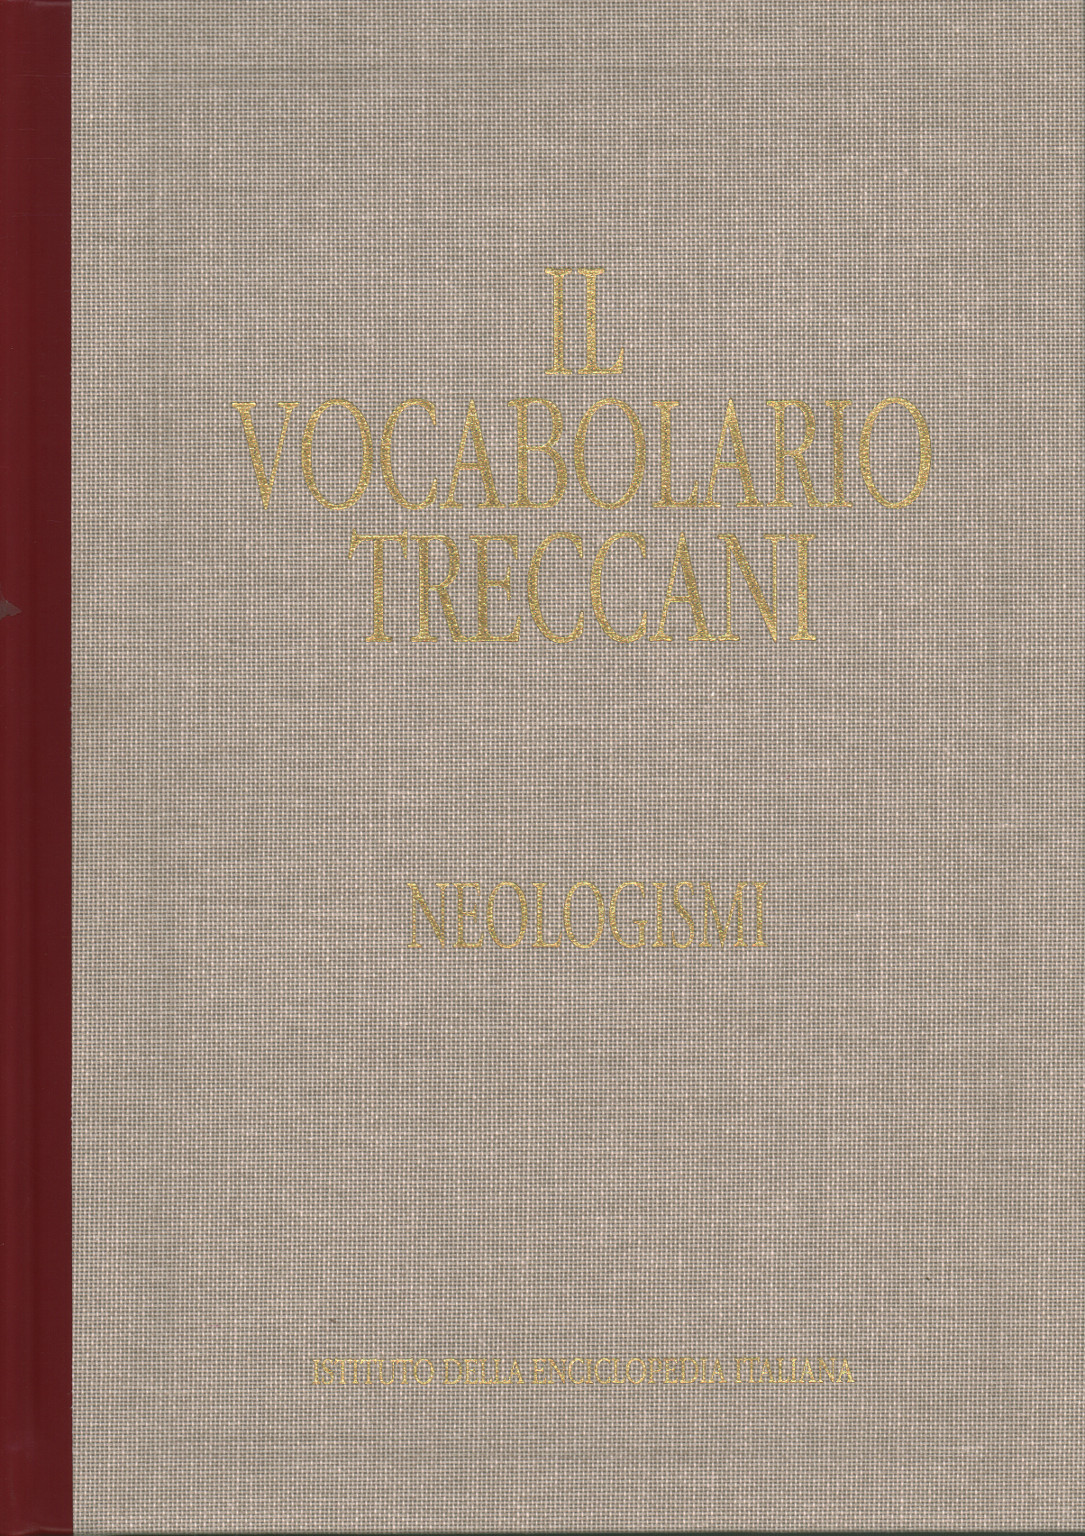 The Treccani vocabulary. Neologisms. New words, AA.VV.